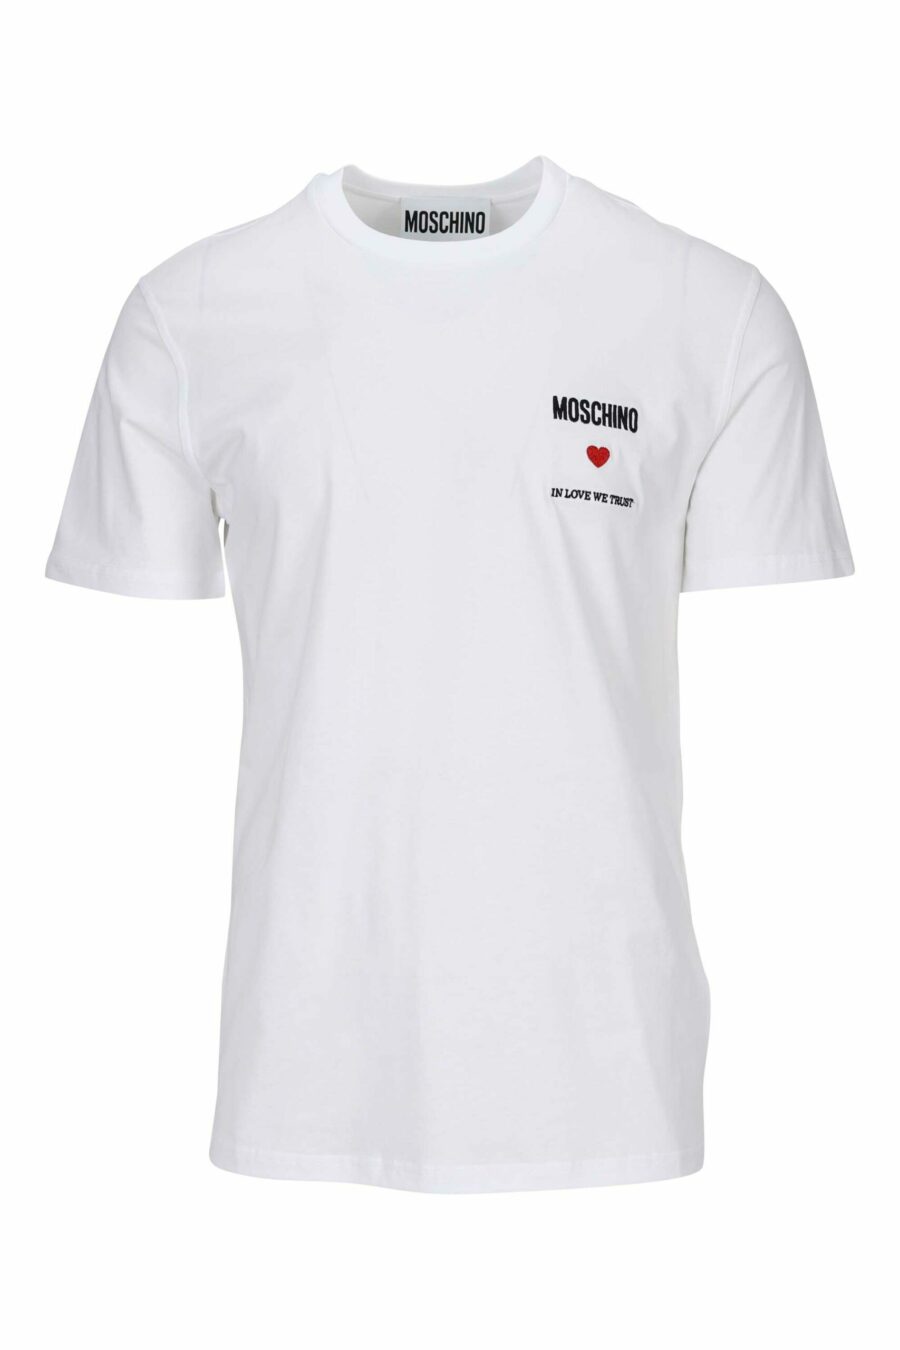 Camiseta blanca con minilogo "in love we trust" - 667113765501 scaled